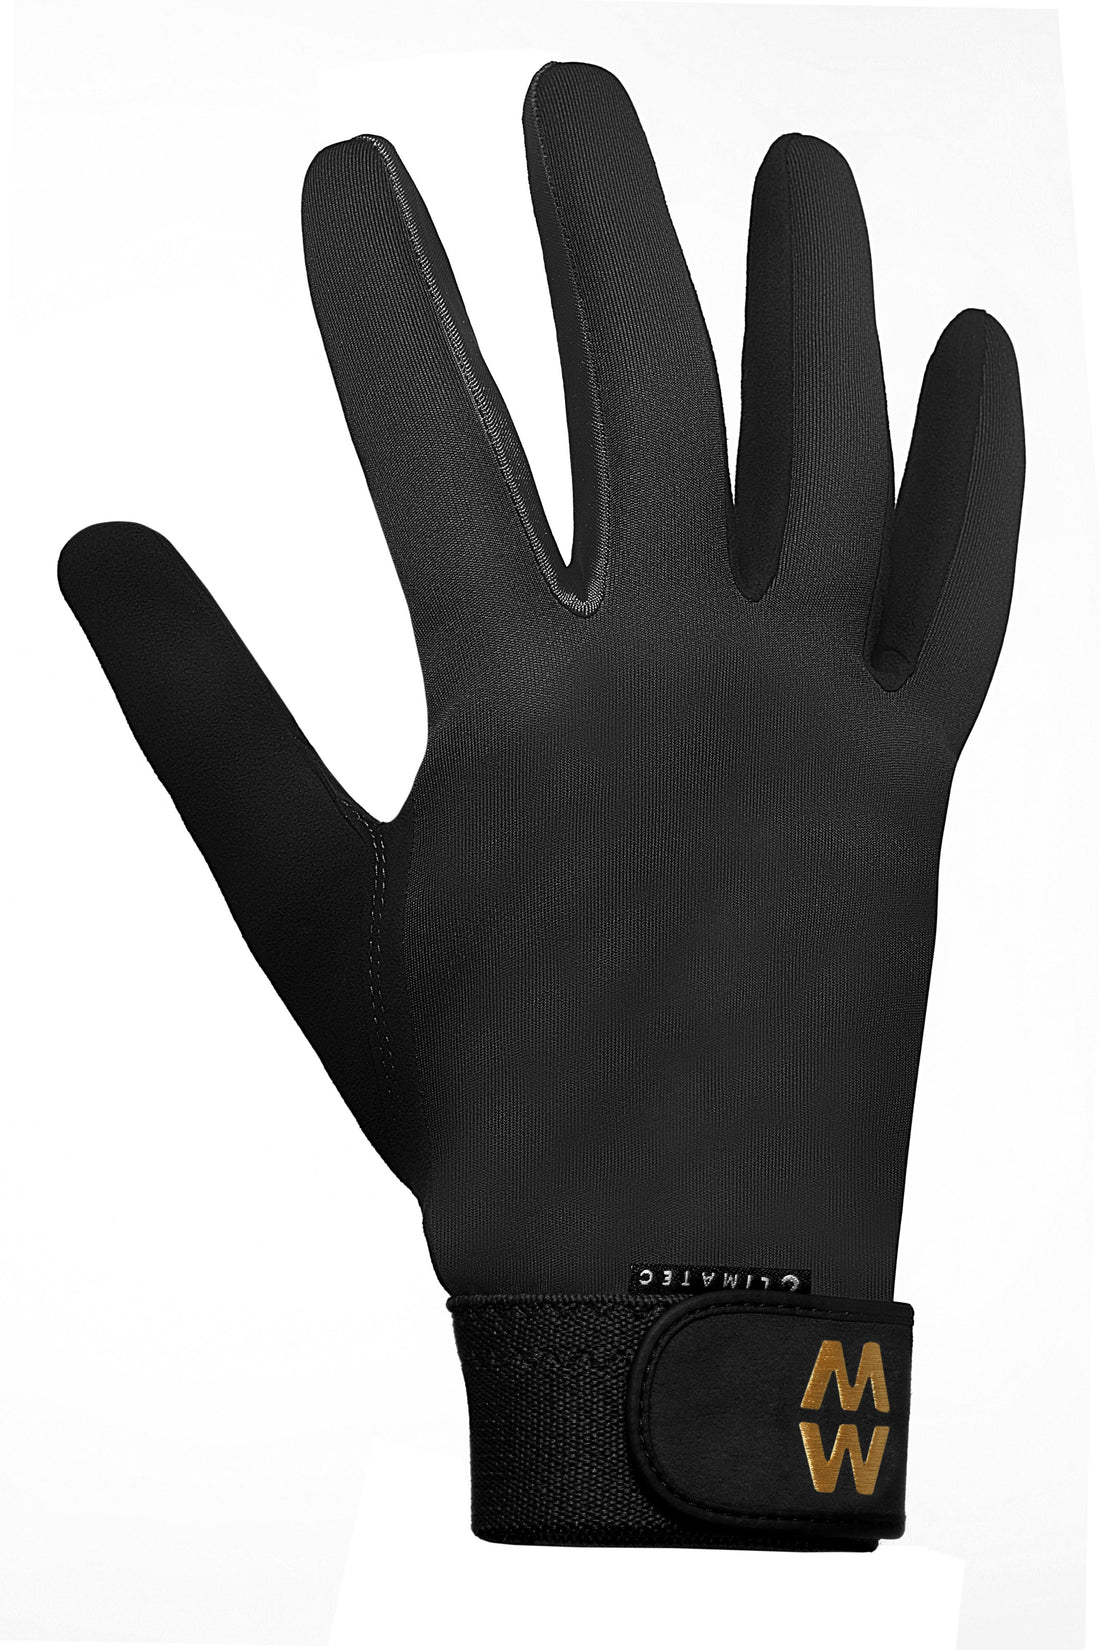 Climatec Long Cuff Gloves - Black